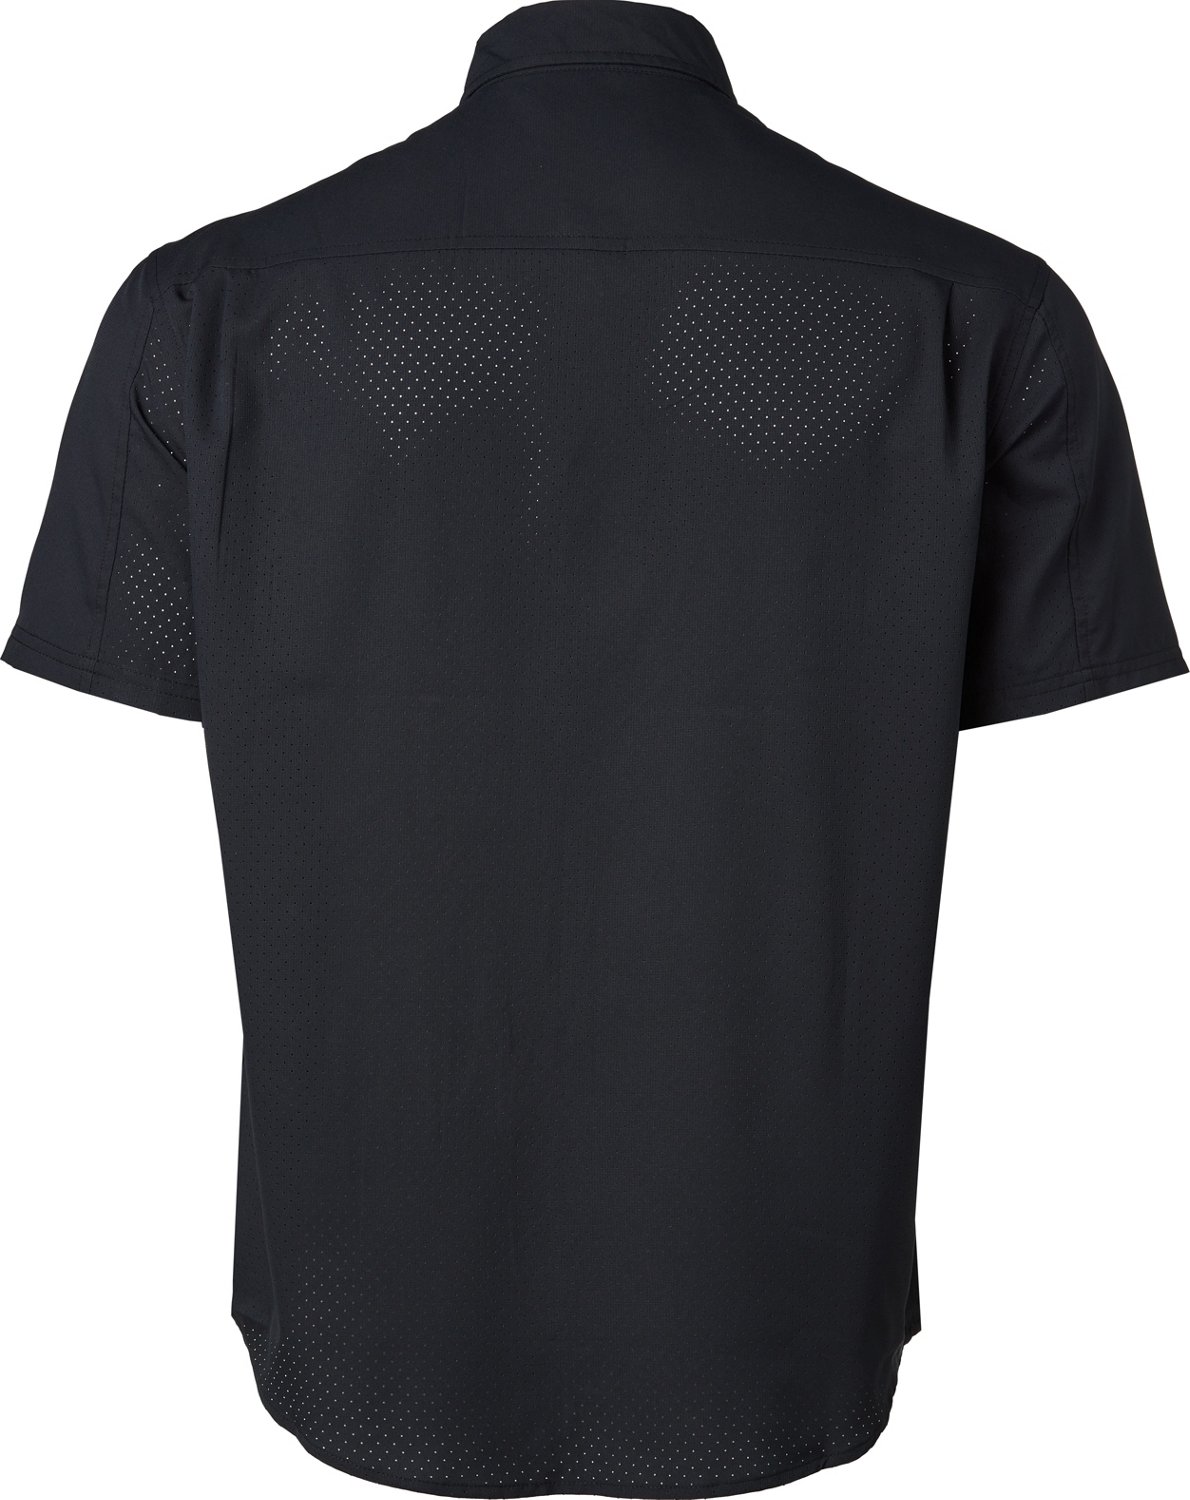 Huk Fishing Shirts For Men Black Dress Shirts for Men Linen Shirt Men's New  Stand-up Collar Thin Seven-point Short-sleeved Shirt Men Cotton tshirts for  Men Undershirts For Men Pack,Black,4XL 